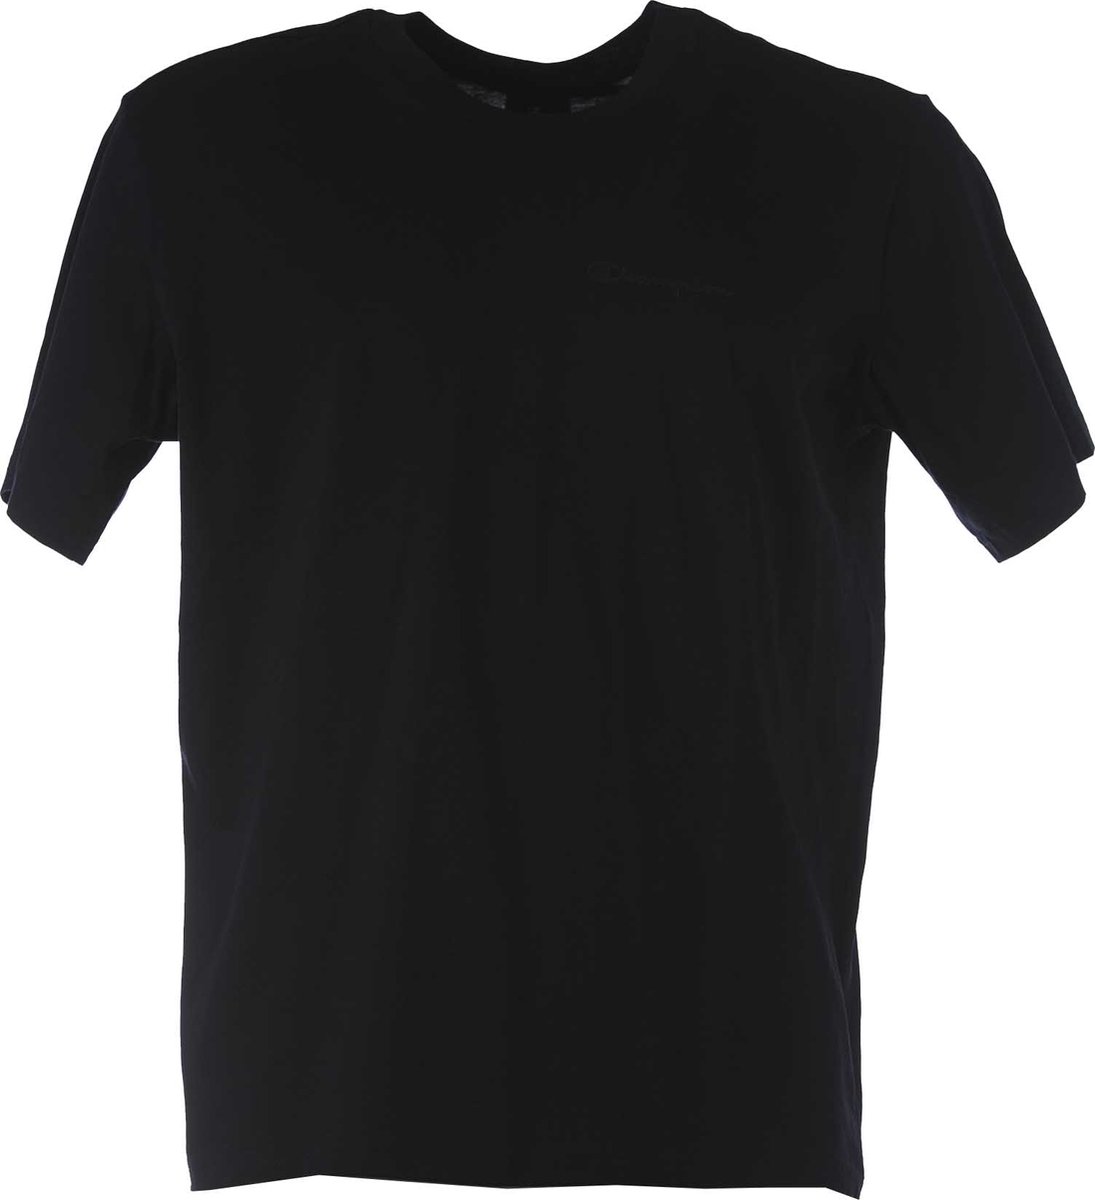 Kampioen Crewneck T-Shirt - Sportwear - Volwassen